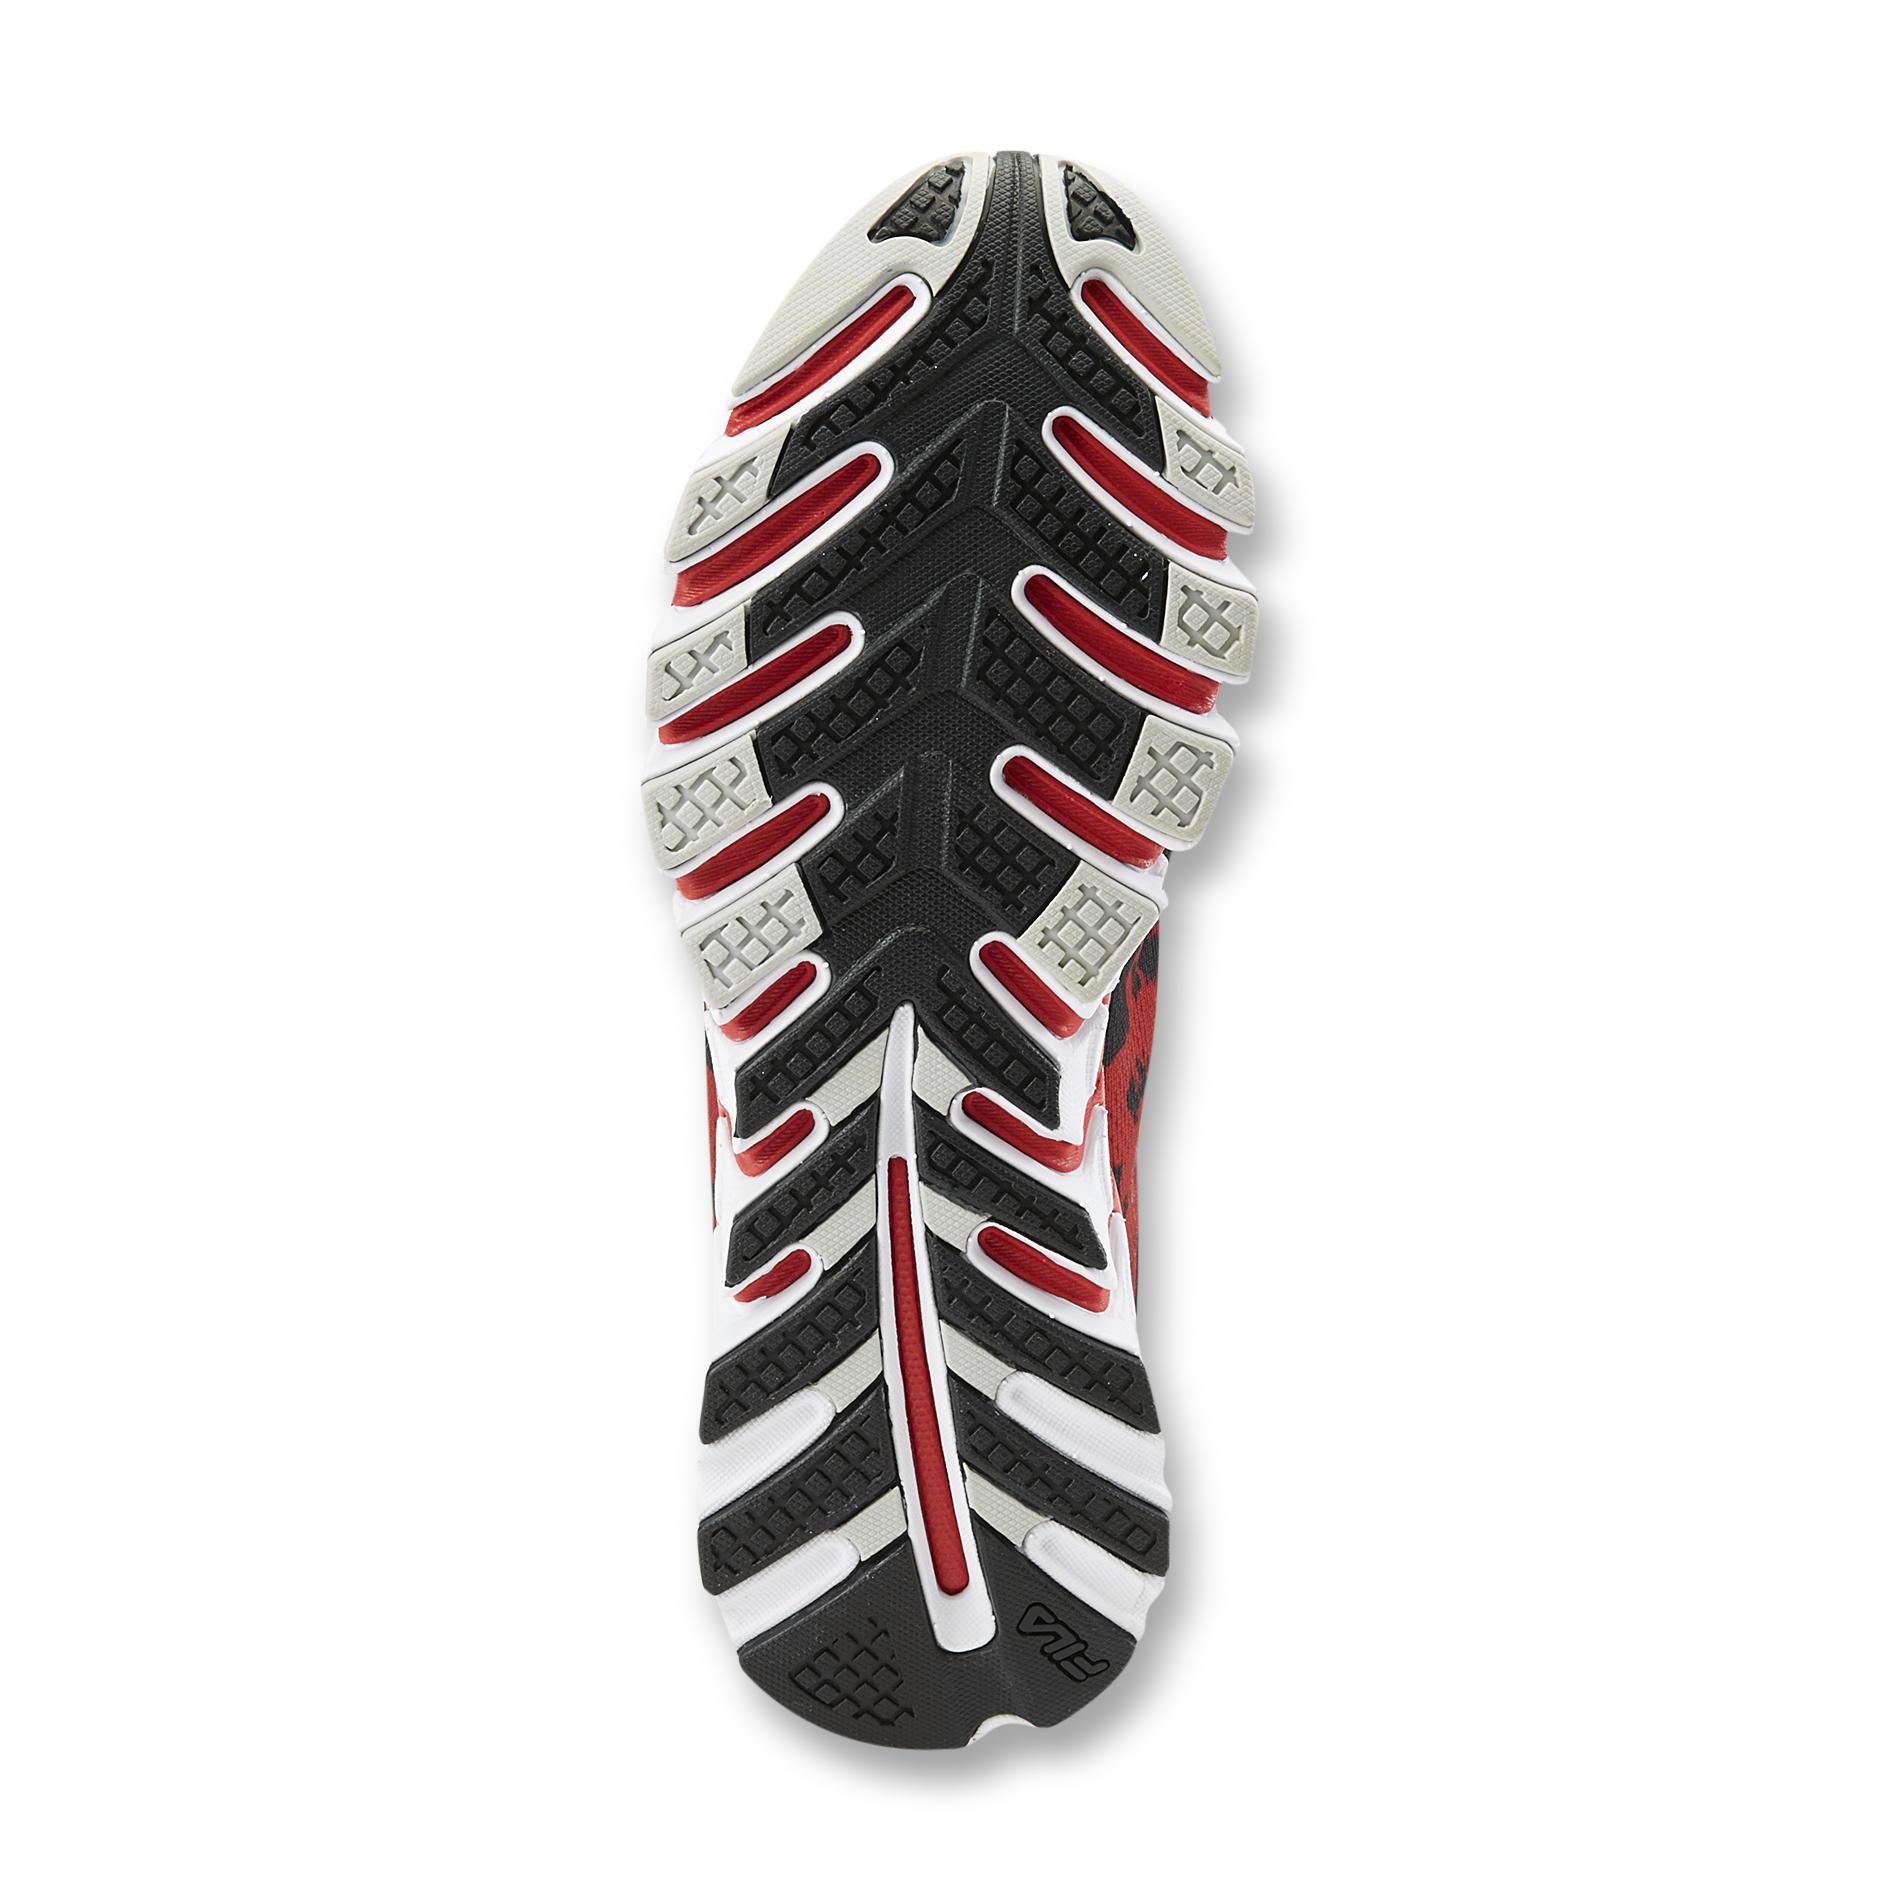 Fila Men's Turbo Fuel Energized Running Shoe - Black/Red